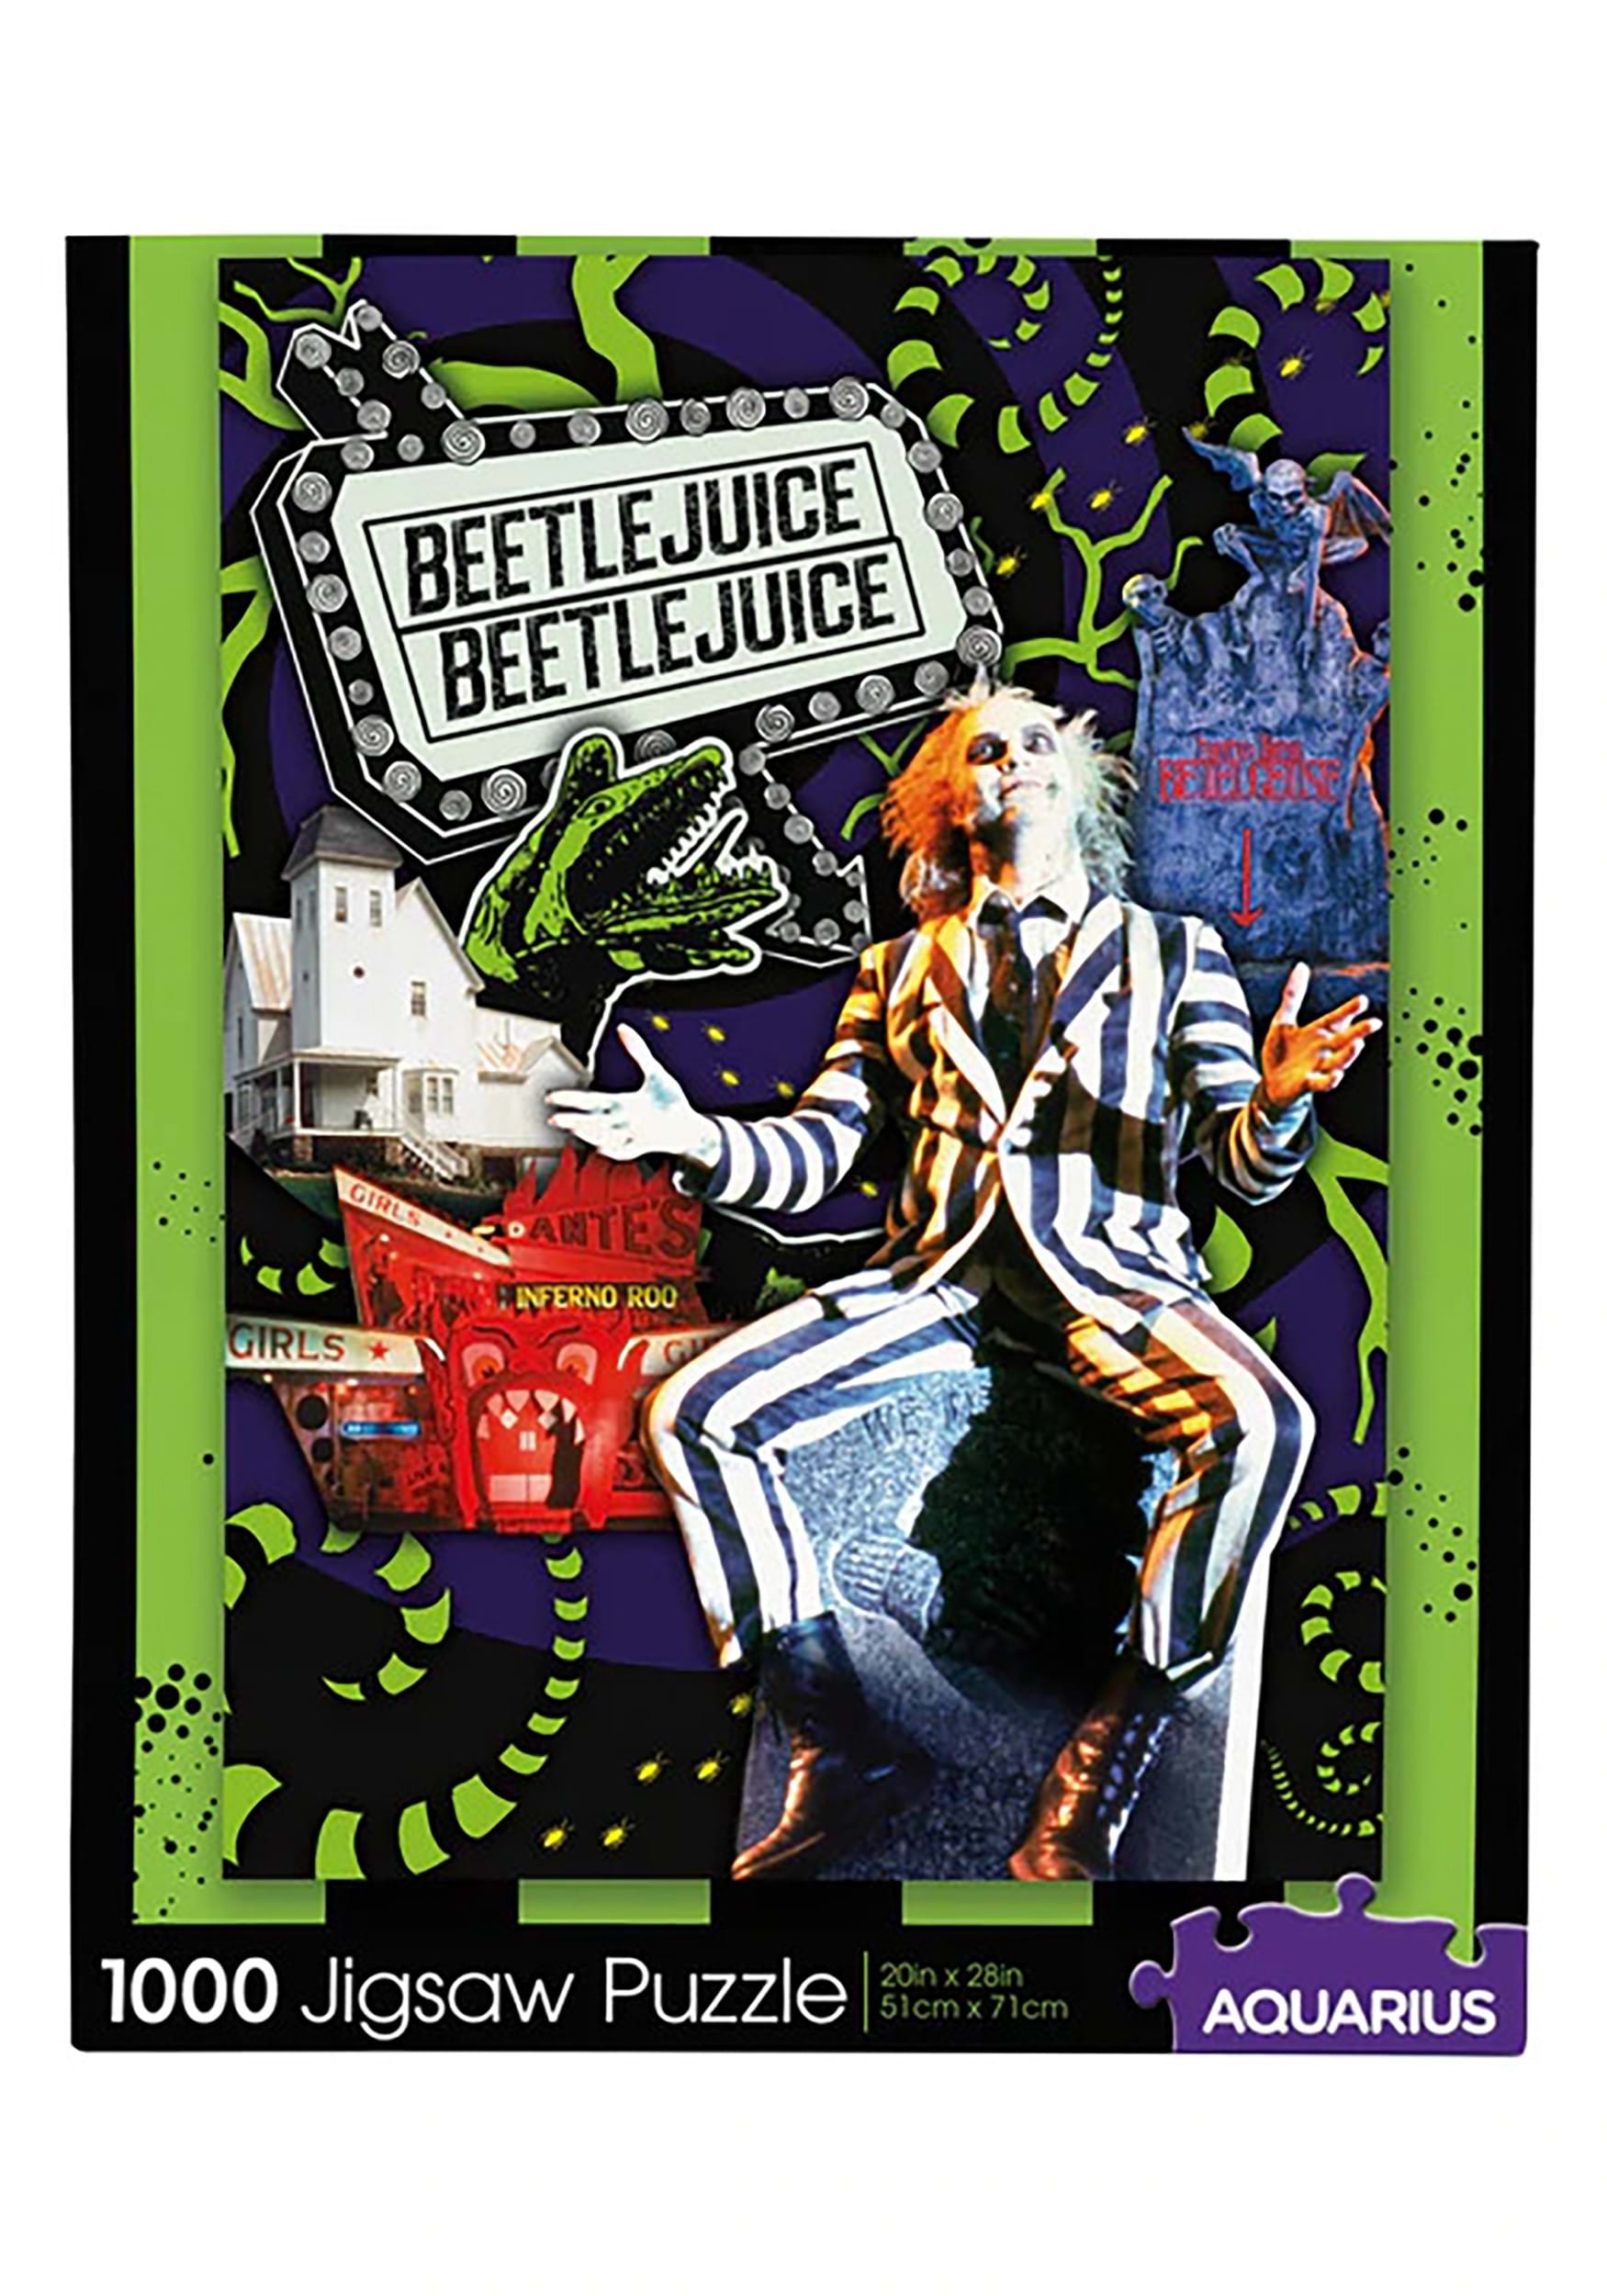 Beetlejuice- Collage 1000 piece Puzzle